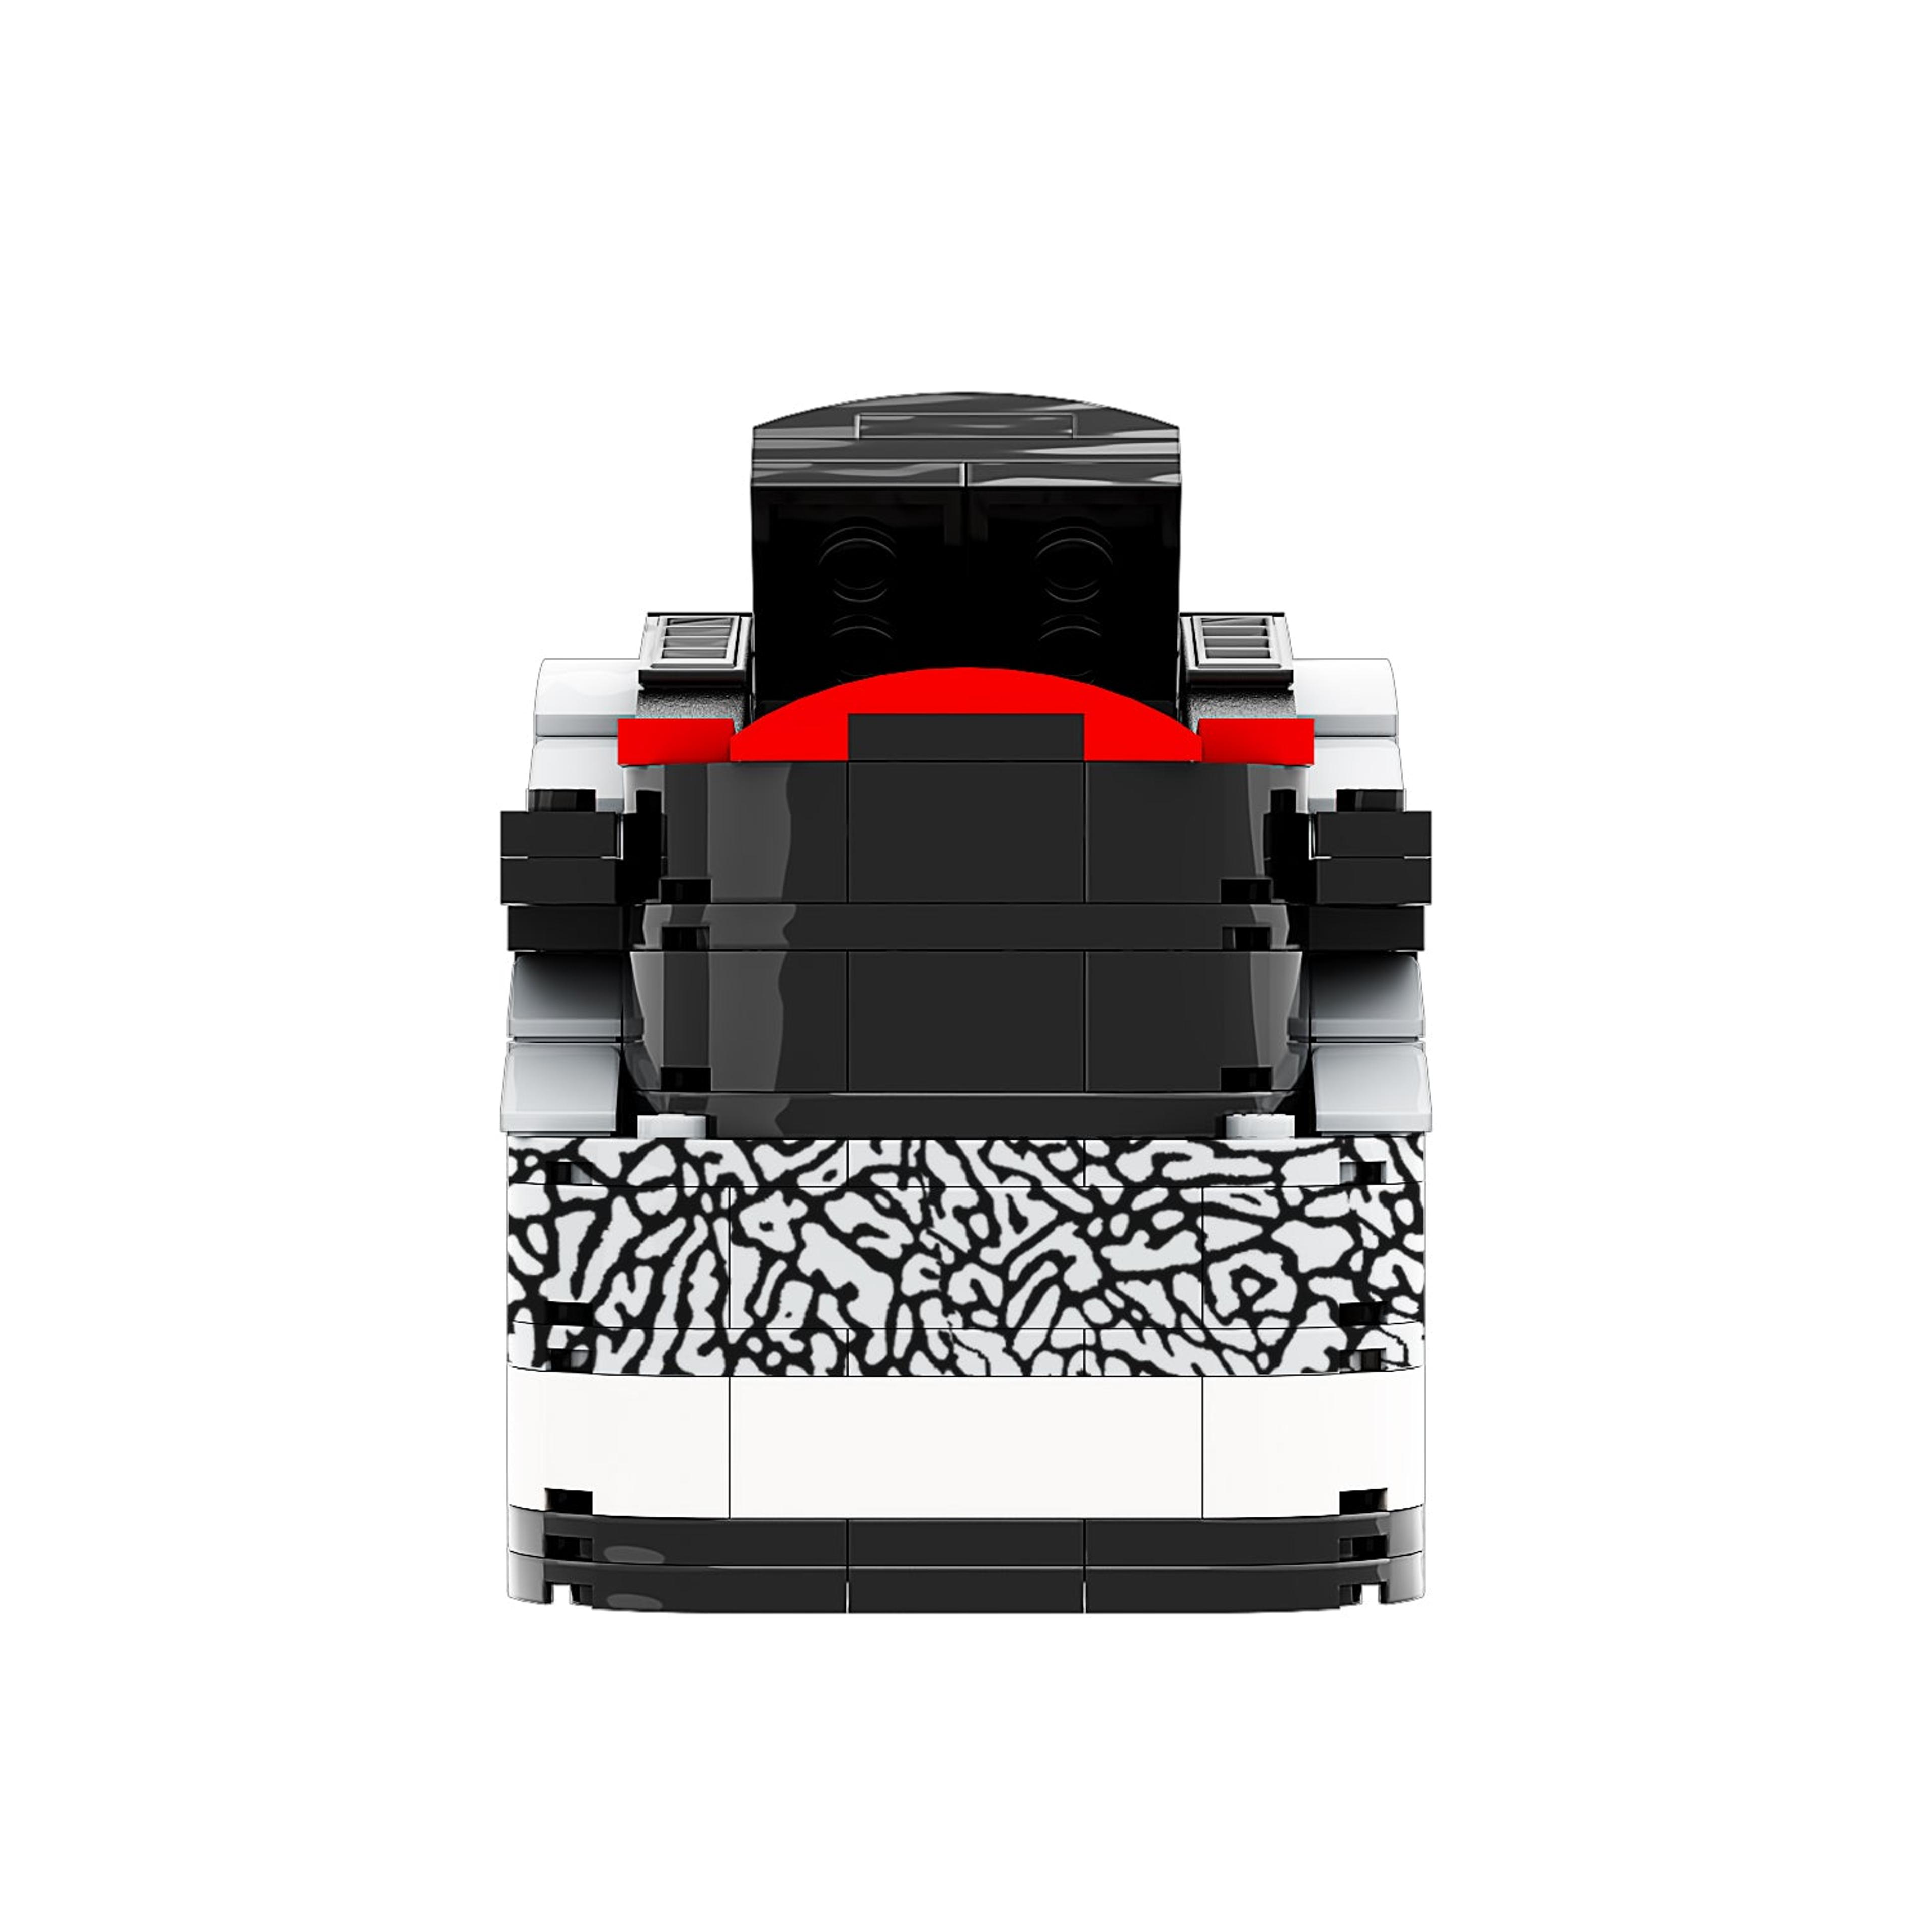 Alternate View 8 of REGULAR SB Dunk SUP "Black Cement" Sneaker Bricks with Mini Figu